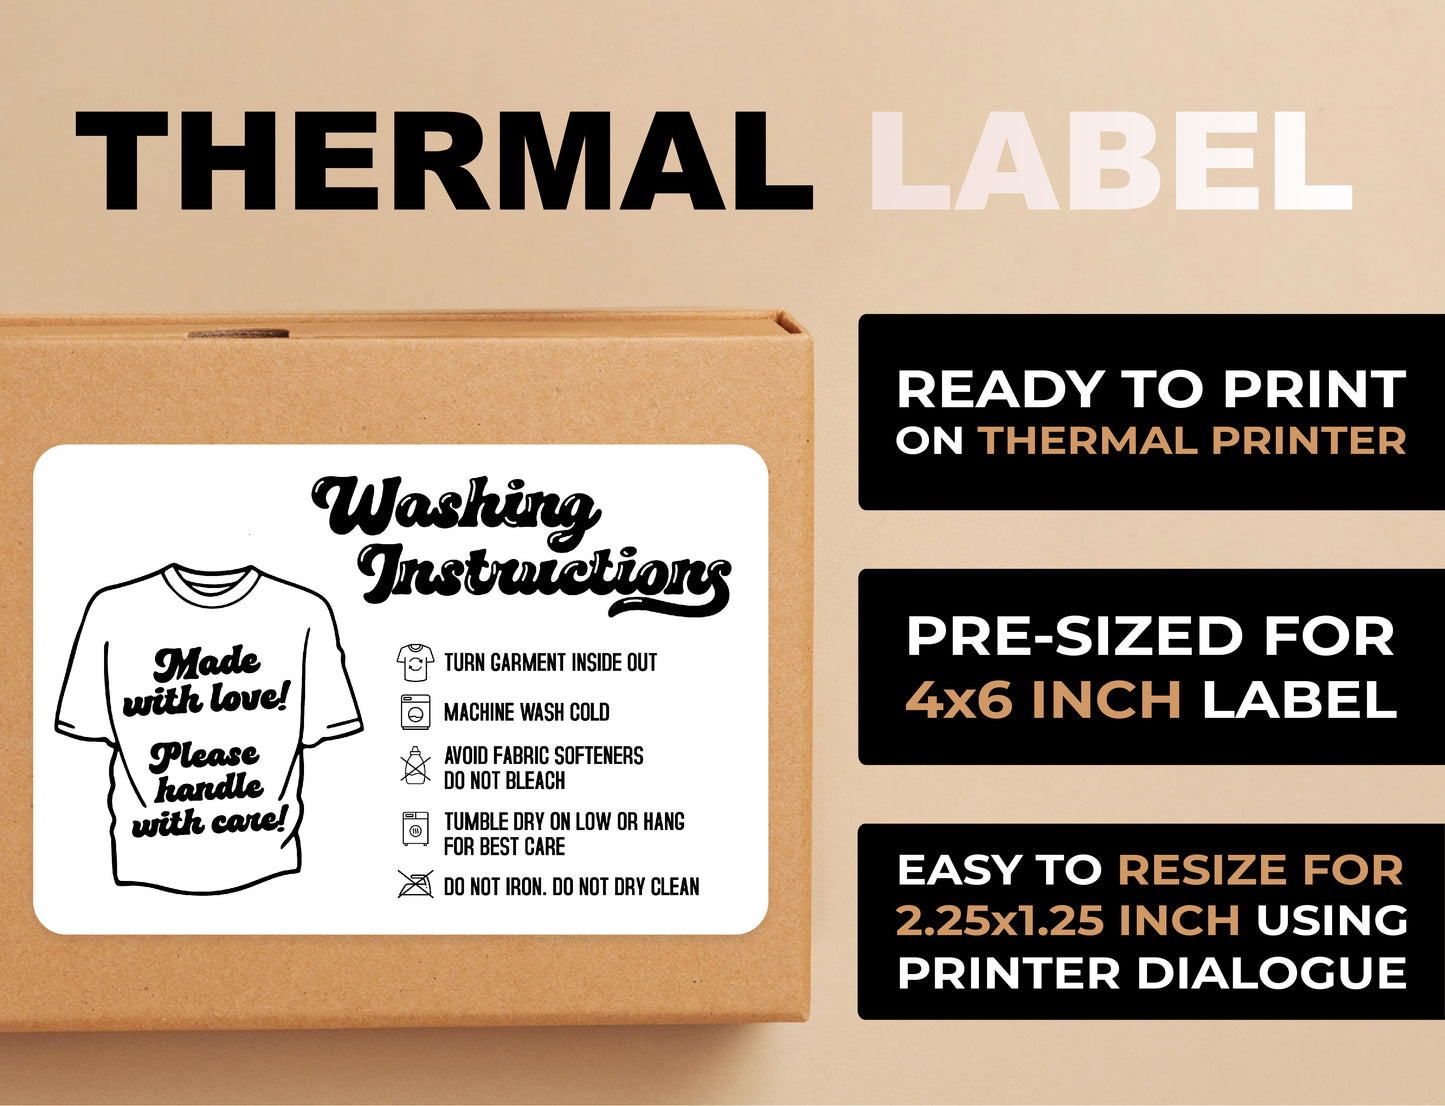 Washing Instructions Thermal Printer Label